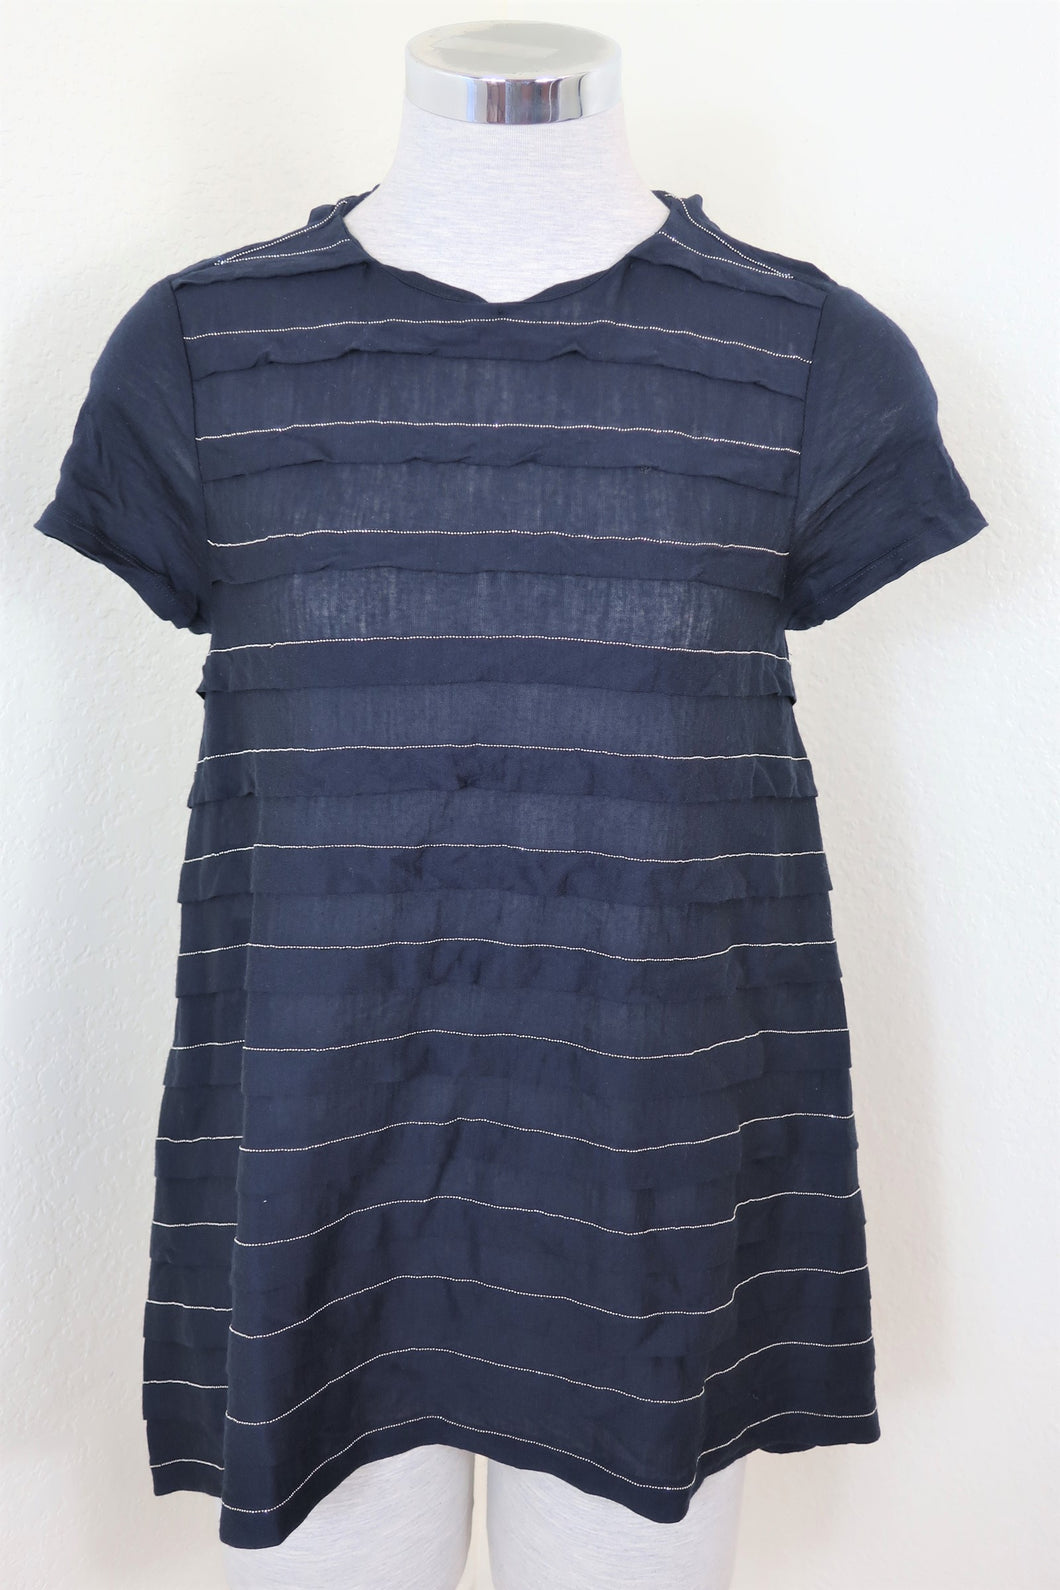 BRUNELLO CUCINELLI Navy Blue Wool Top Blouse Shirt Stripes Sz 6 2 4 6 Small Medium